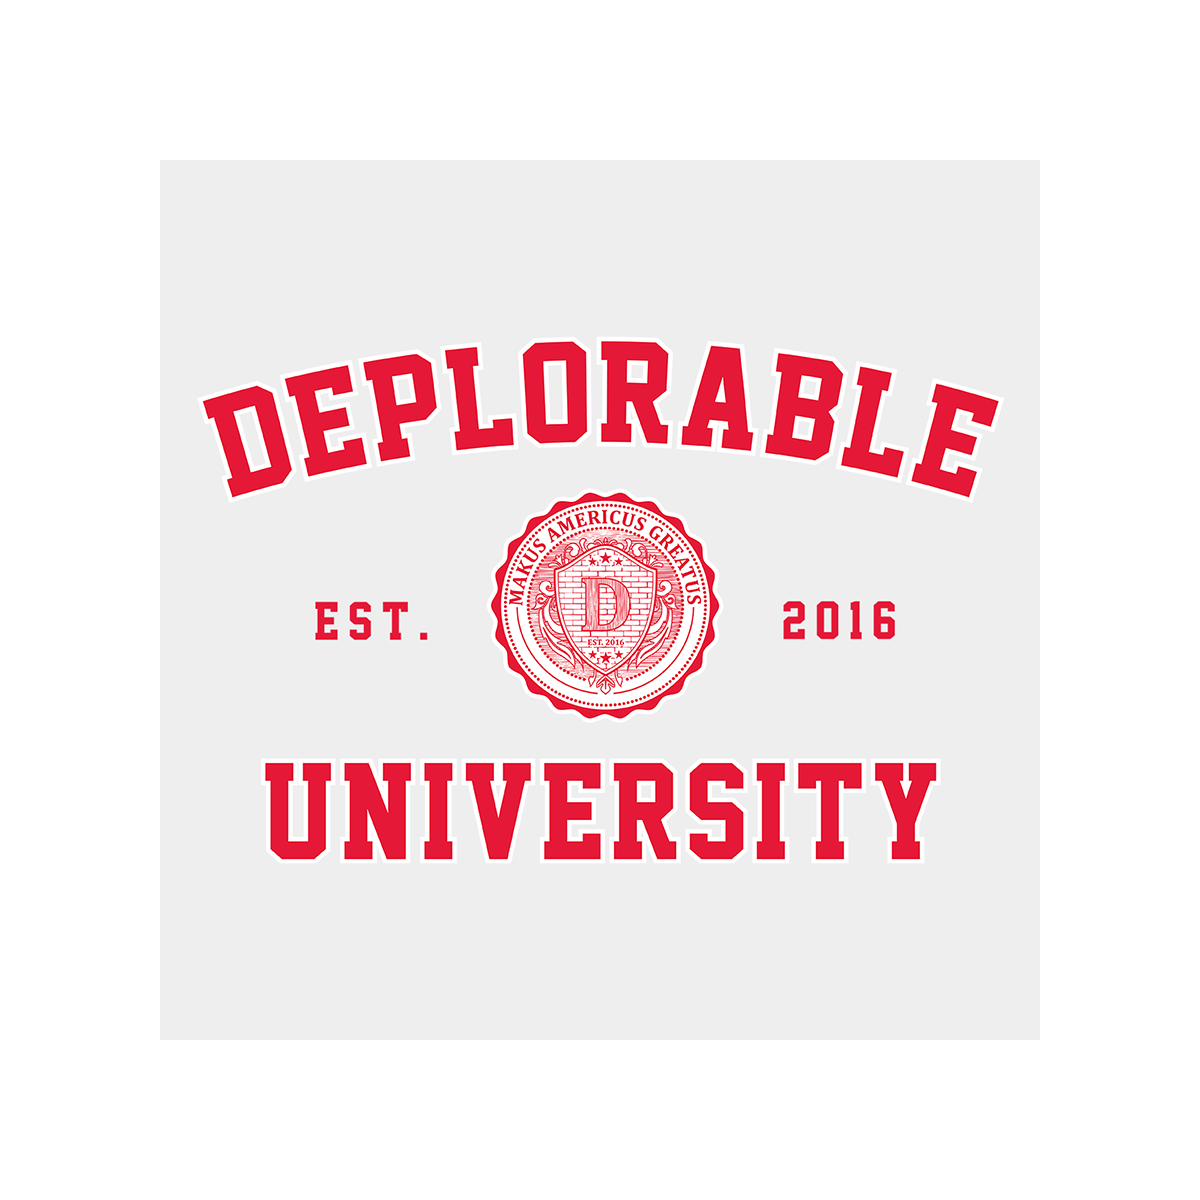 Deplorable University Long Sleeve T-Shirt - White